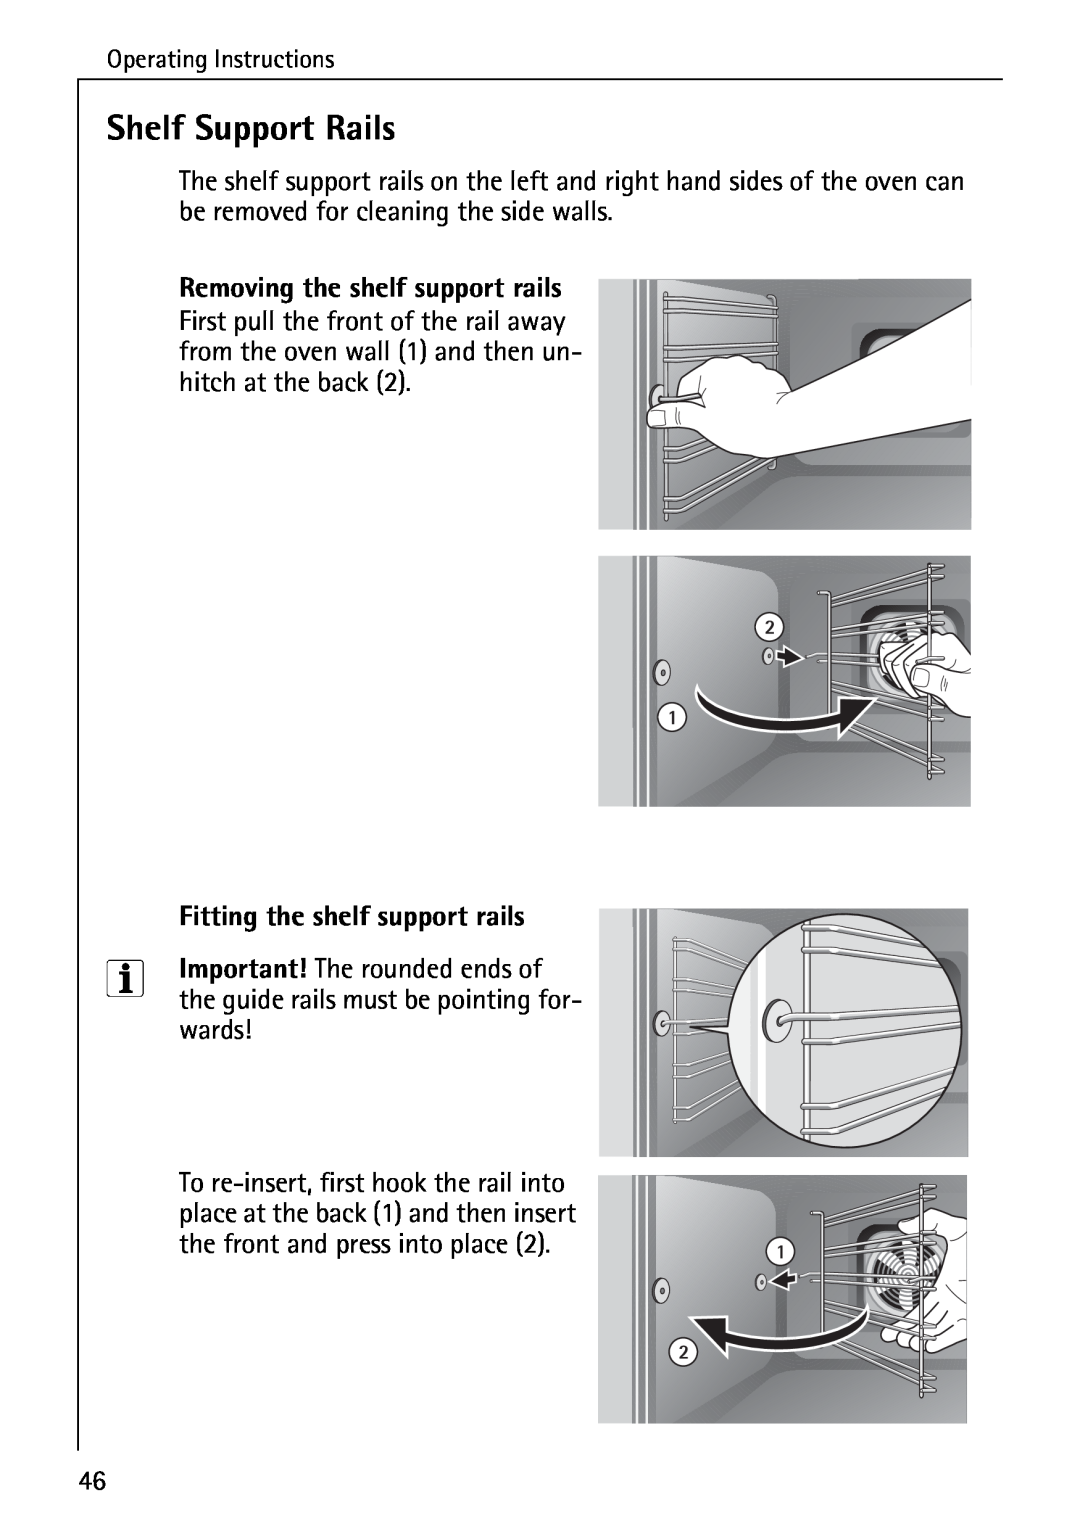 AEG E4100-1 manual Shelf Support Rails, Removing the shelf support rails, Fitting the shelf support rails 